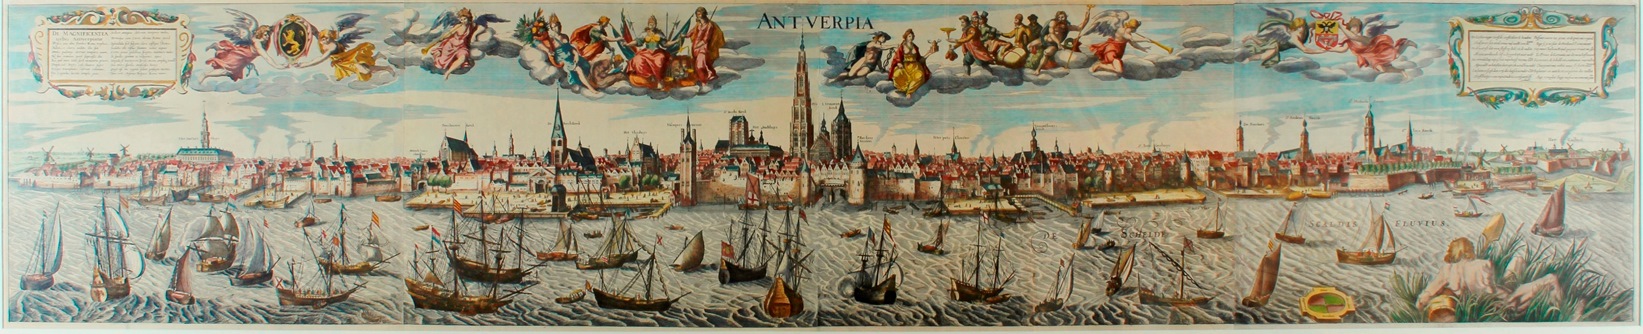 Jan Baptist - Antwerpen panorama - Jan Bapitst Vrients